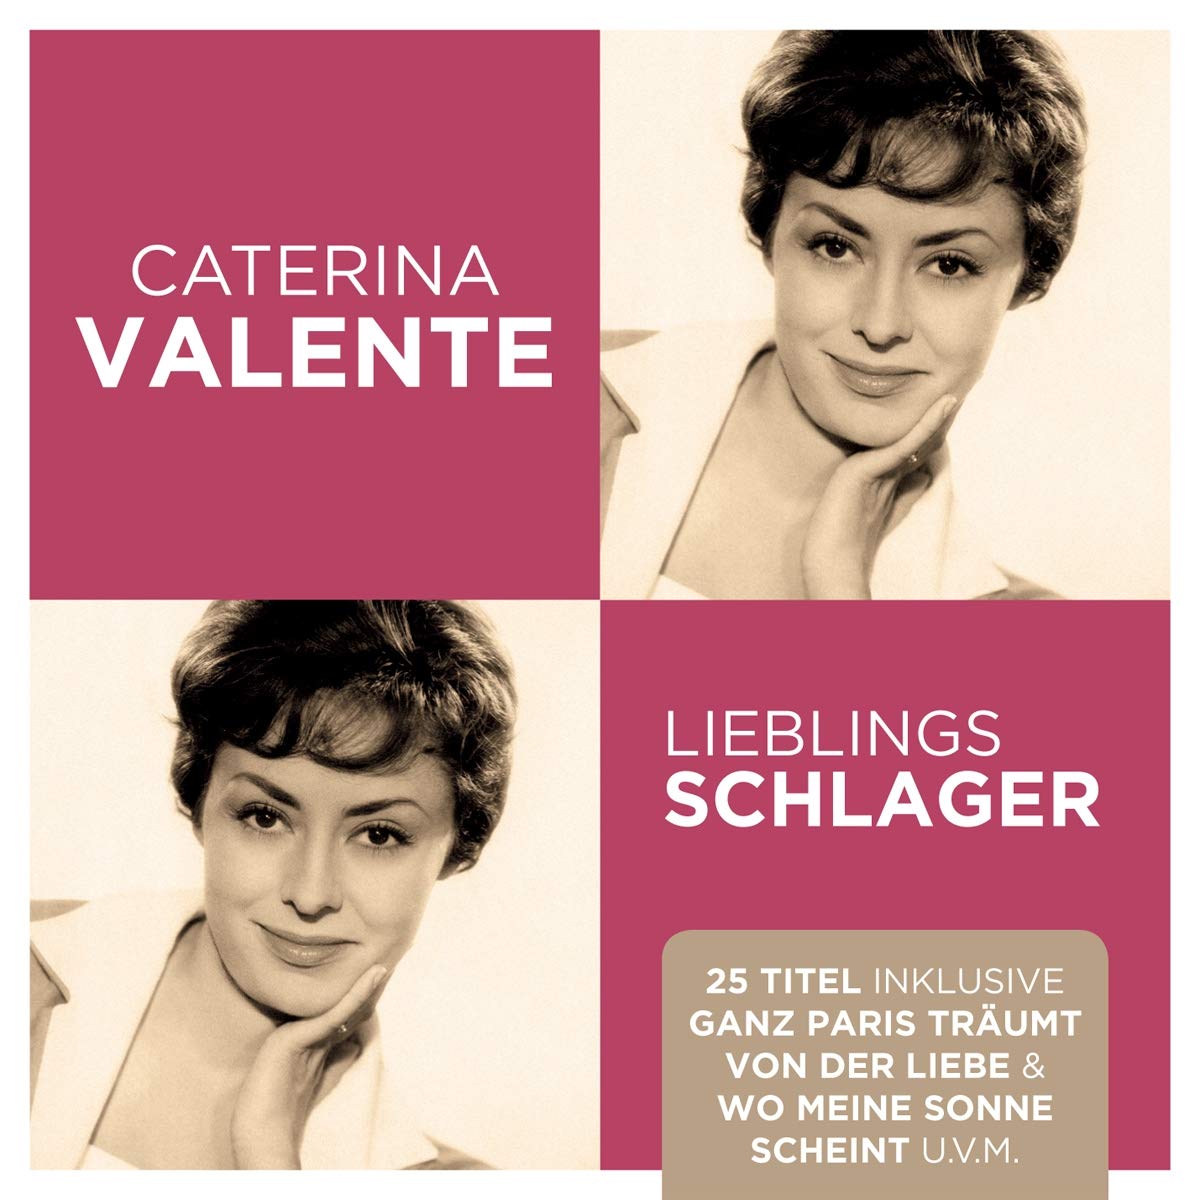 CATERINA VALENTE - LIEBLINGSSCHLAGER